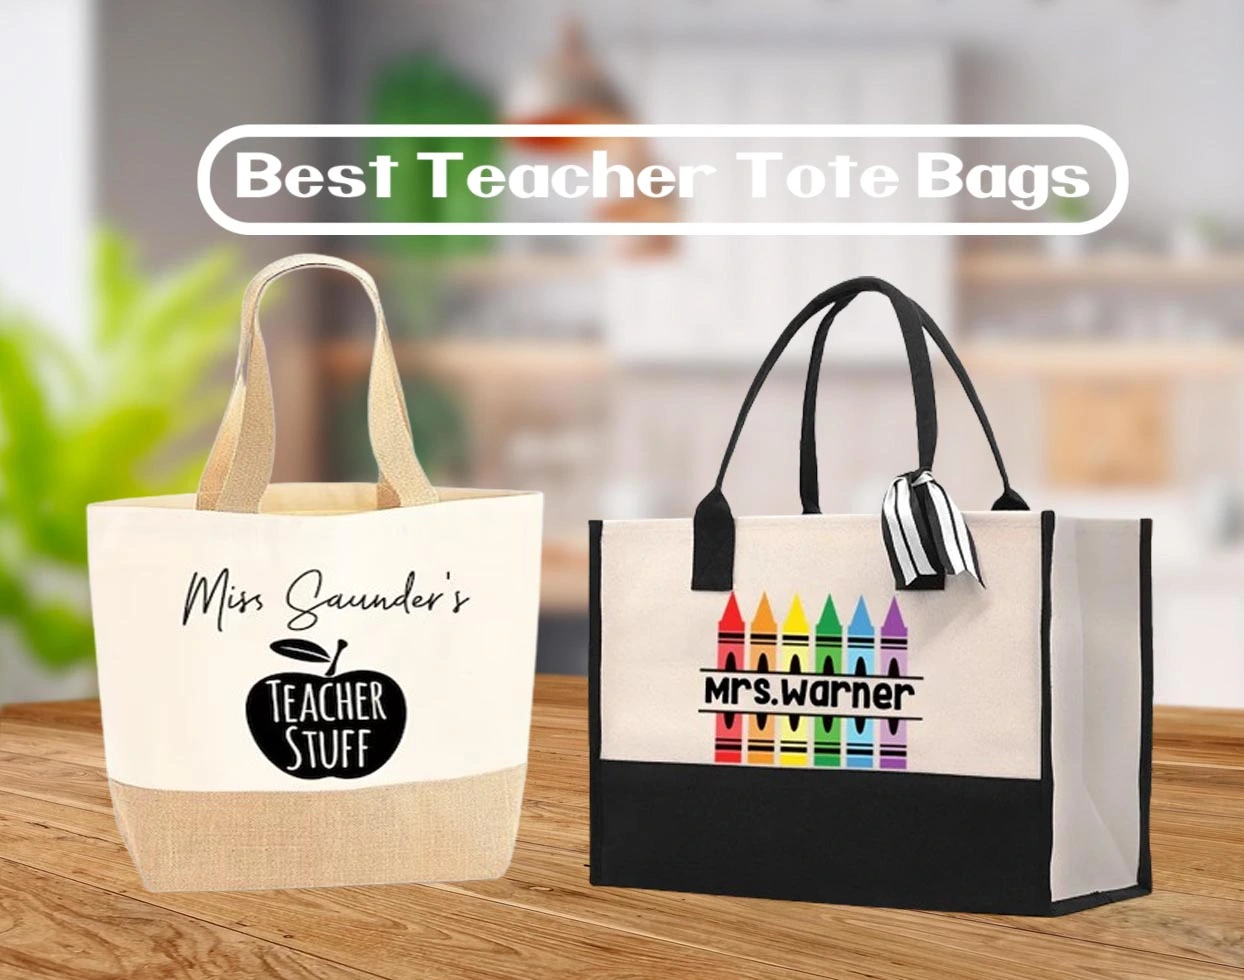 Best Teacher Tote Bags